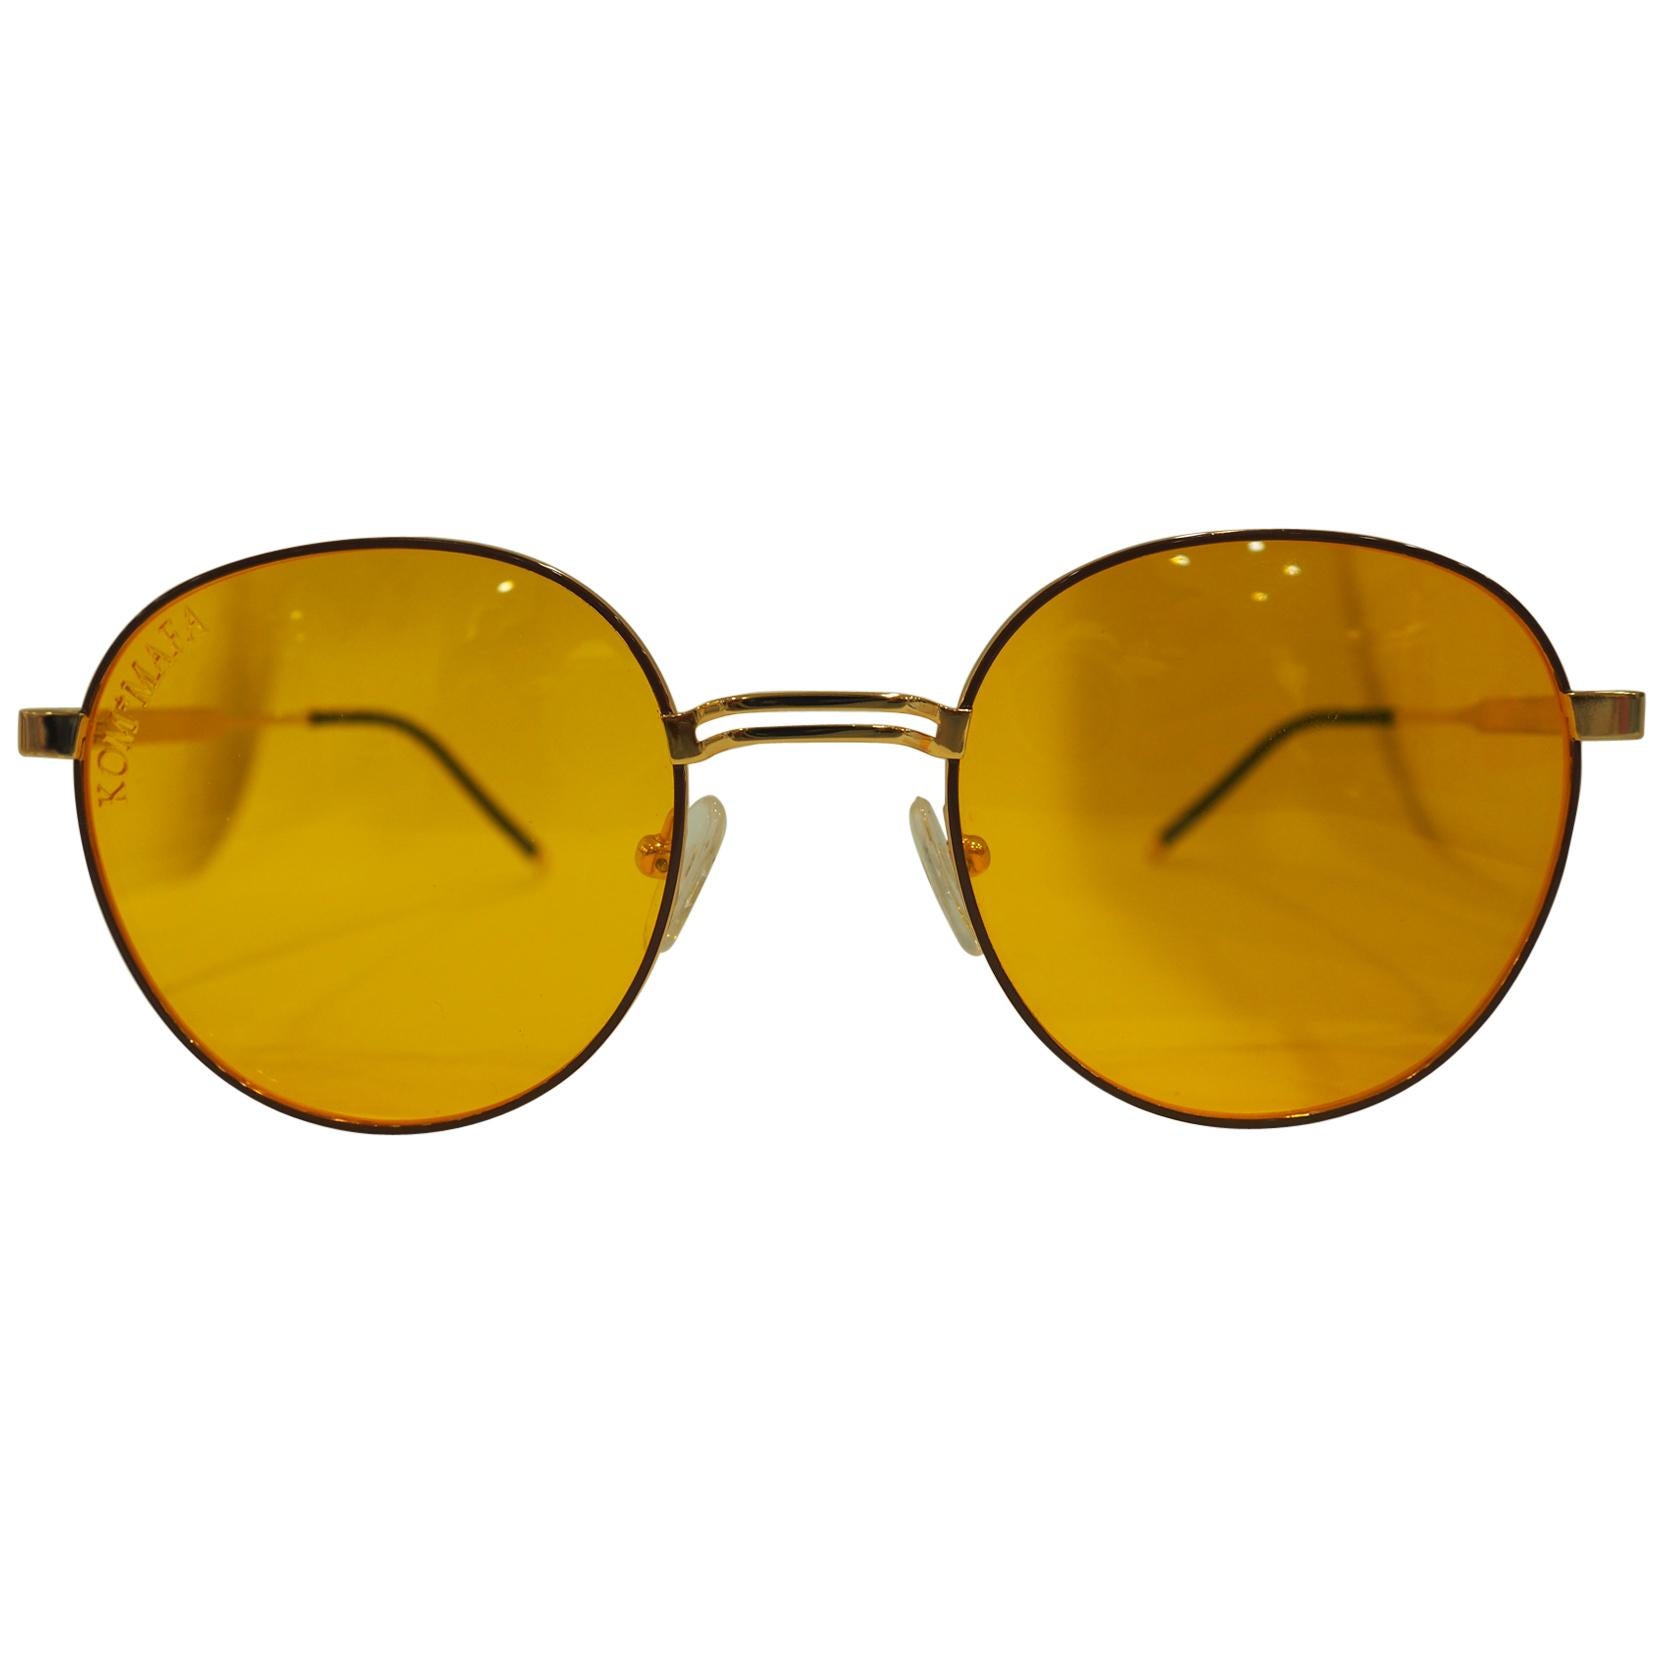 Kommafa orange sunglasses